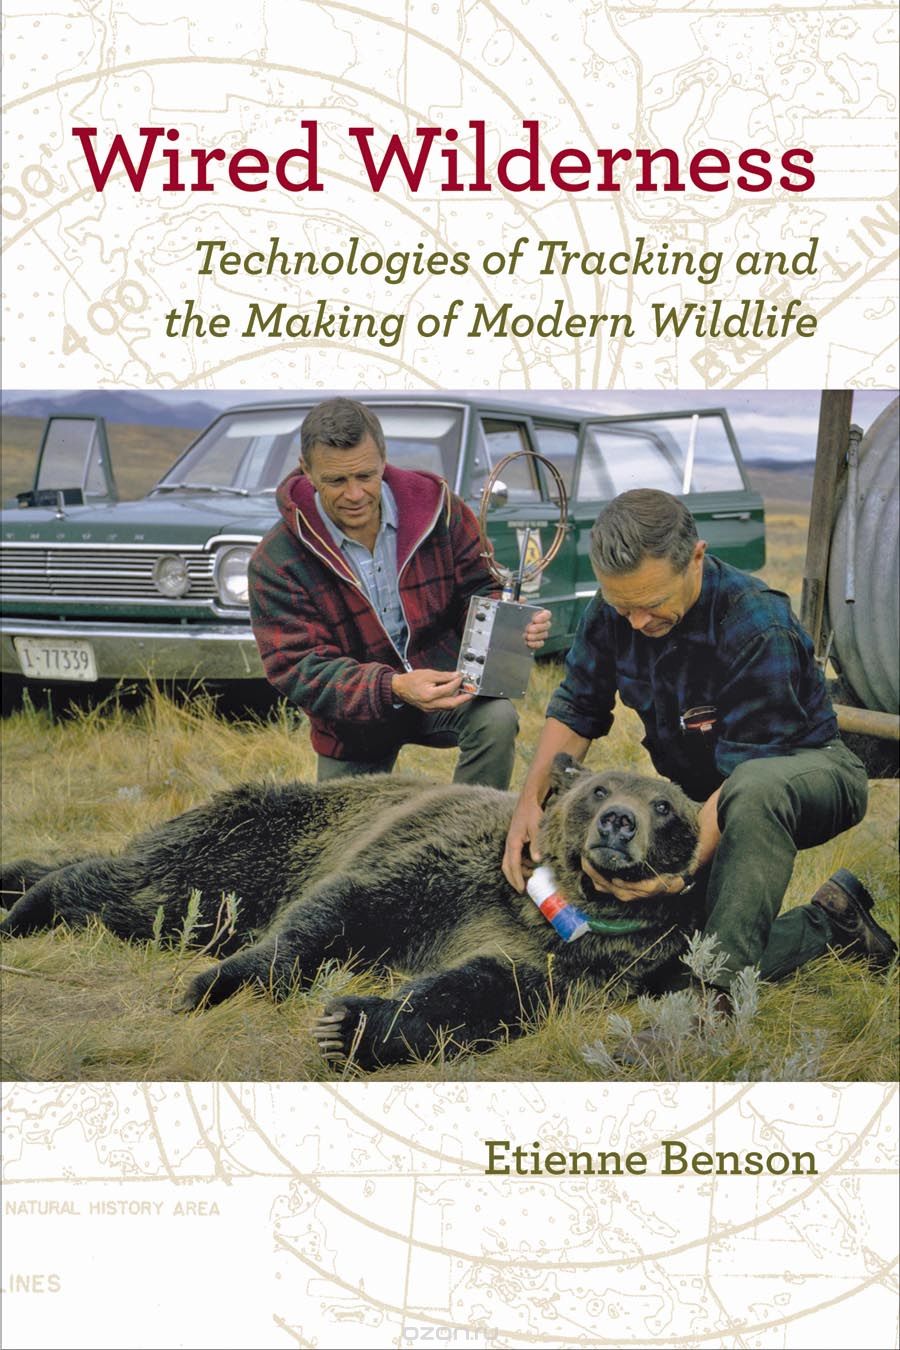 Скачать книгу "Wired Wilderness – Technologies of Tracking and the Making of Modern Wildlife"